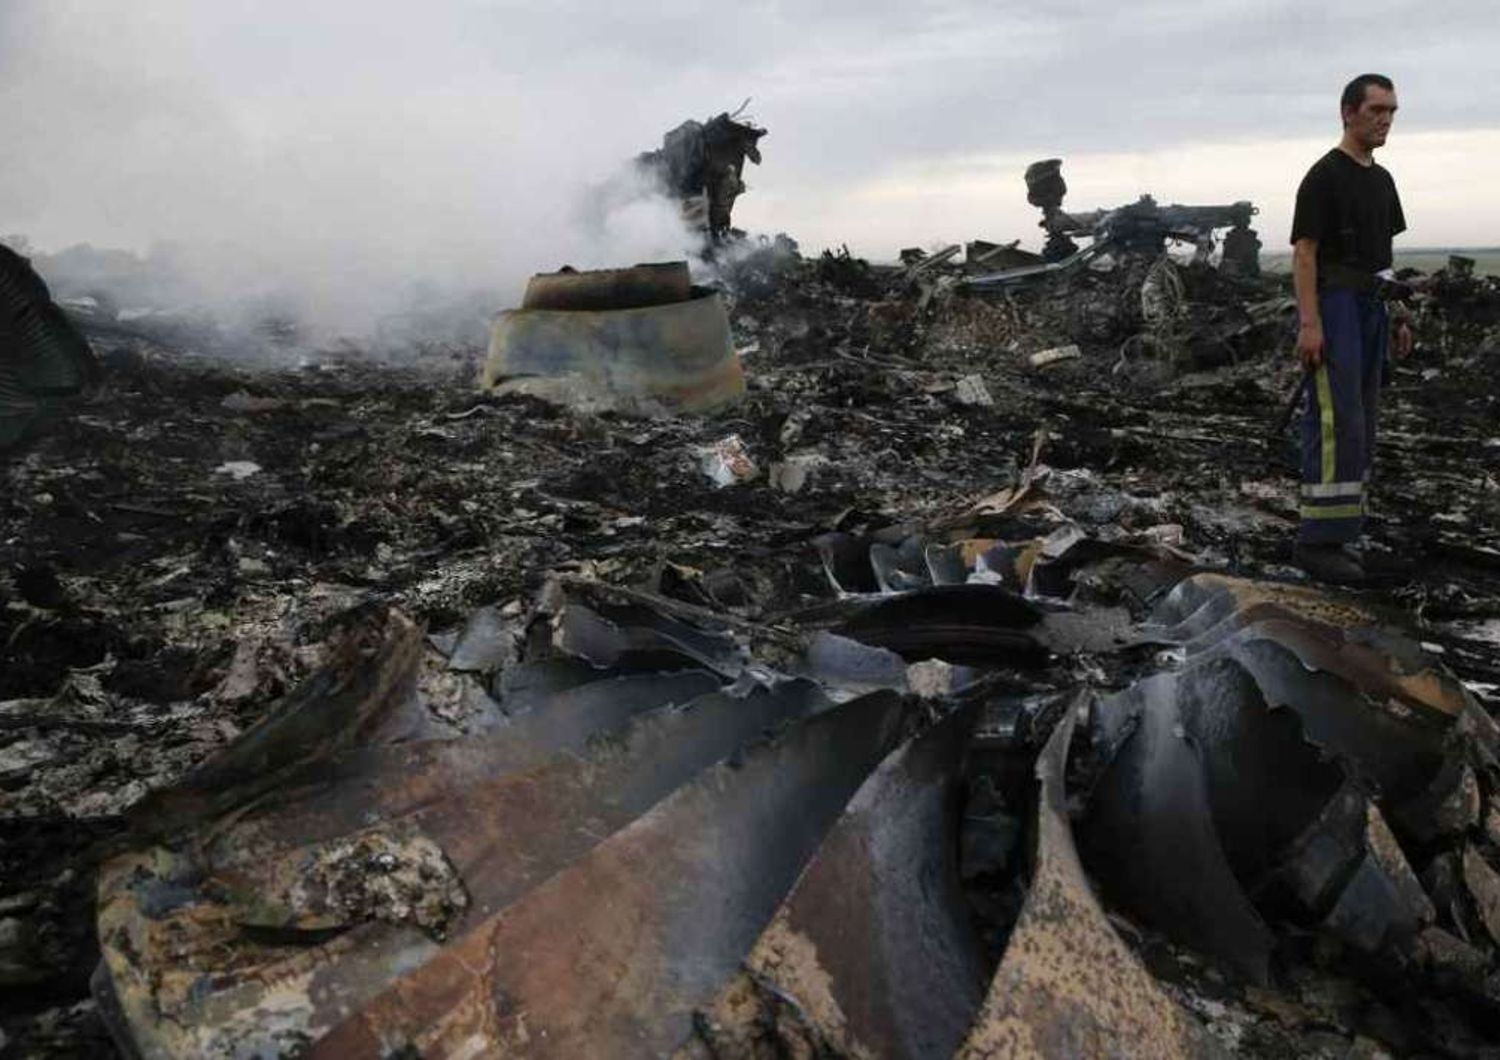 No humanitarian truce over crash, says Ukraine rebel chief